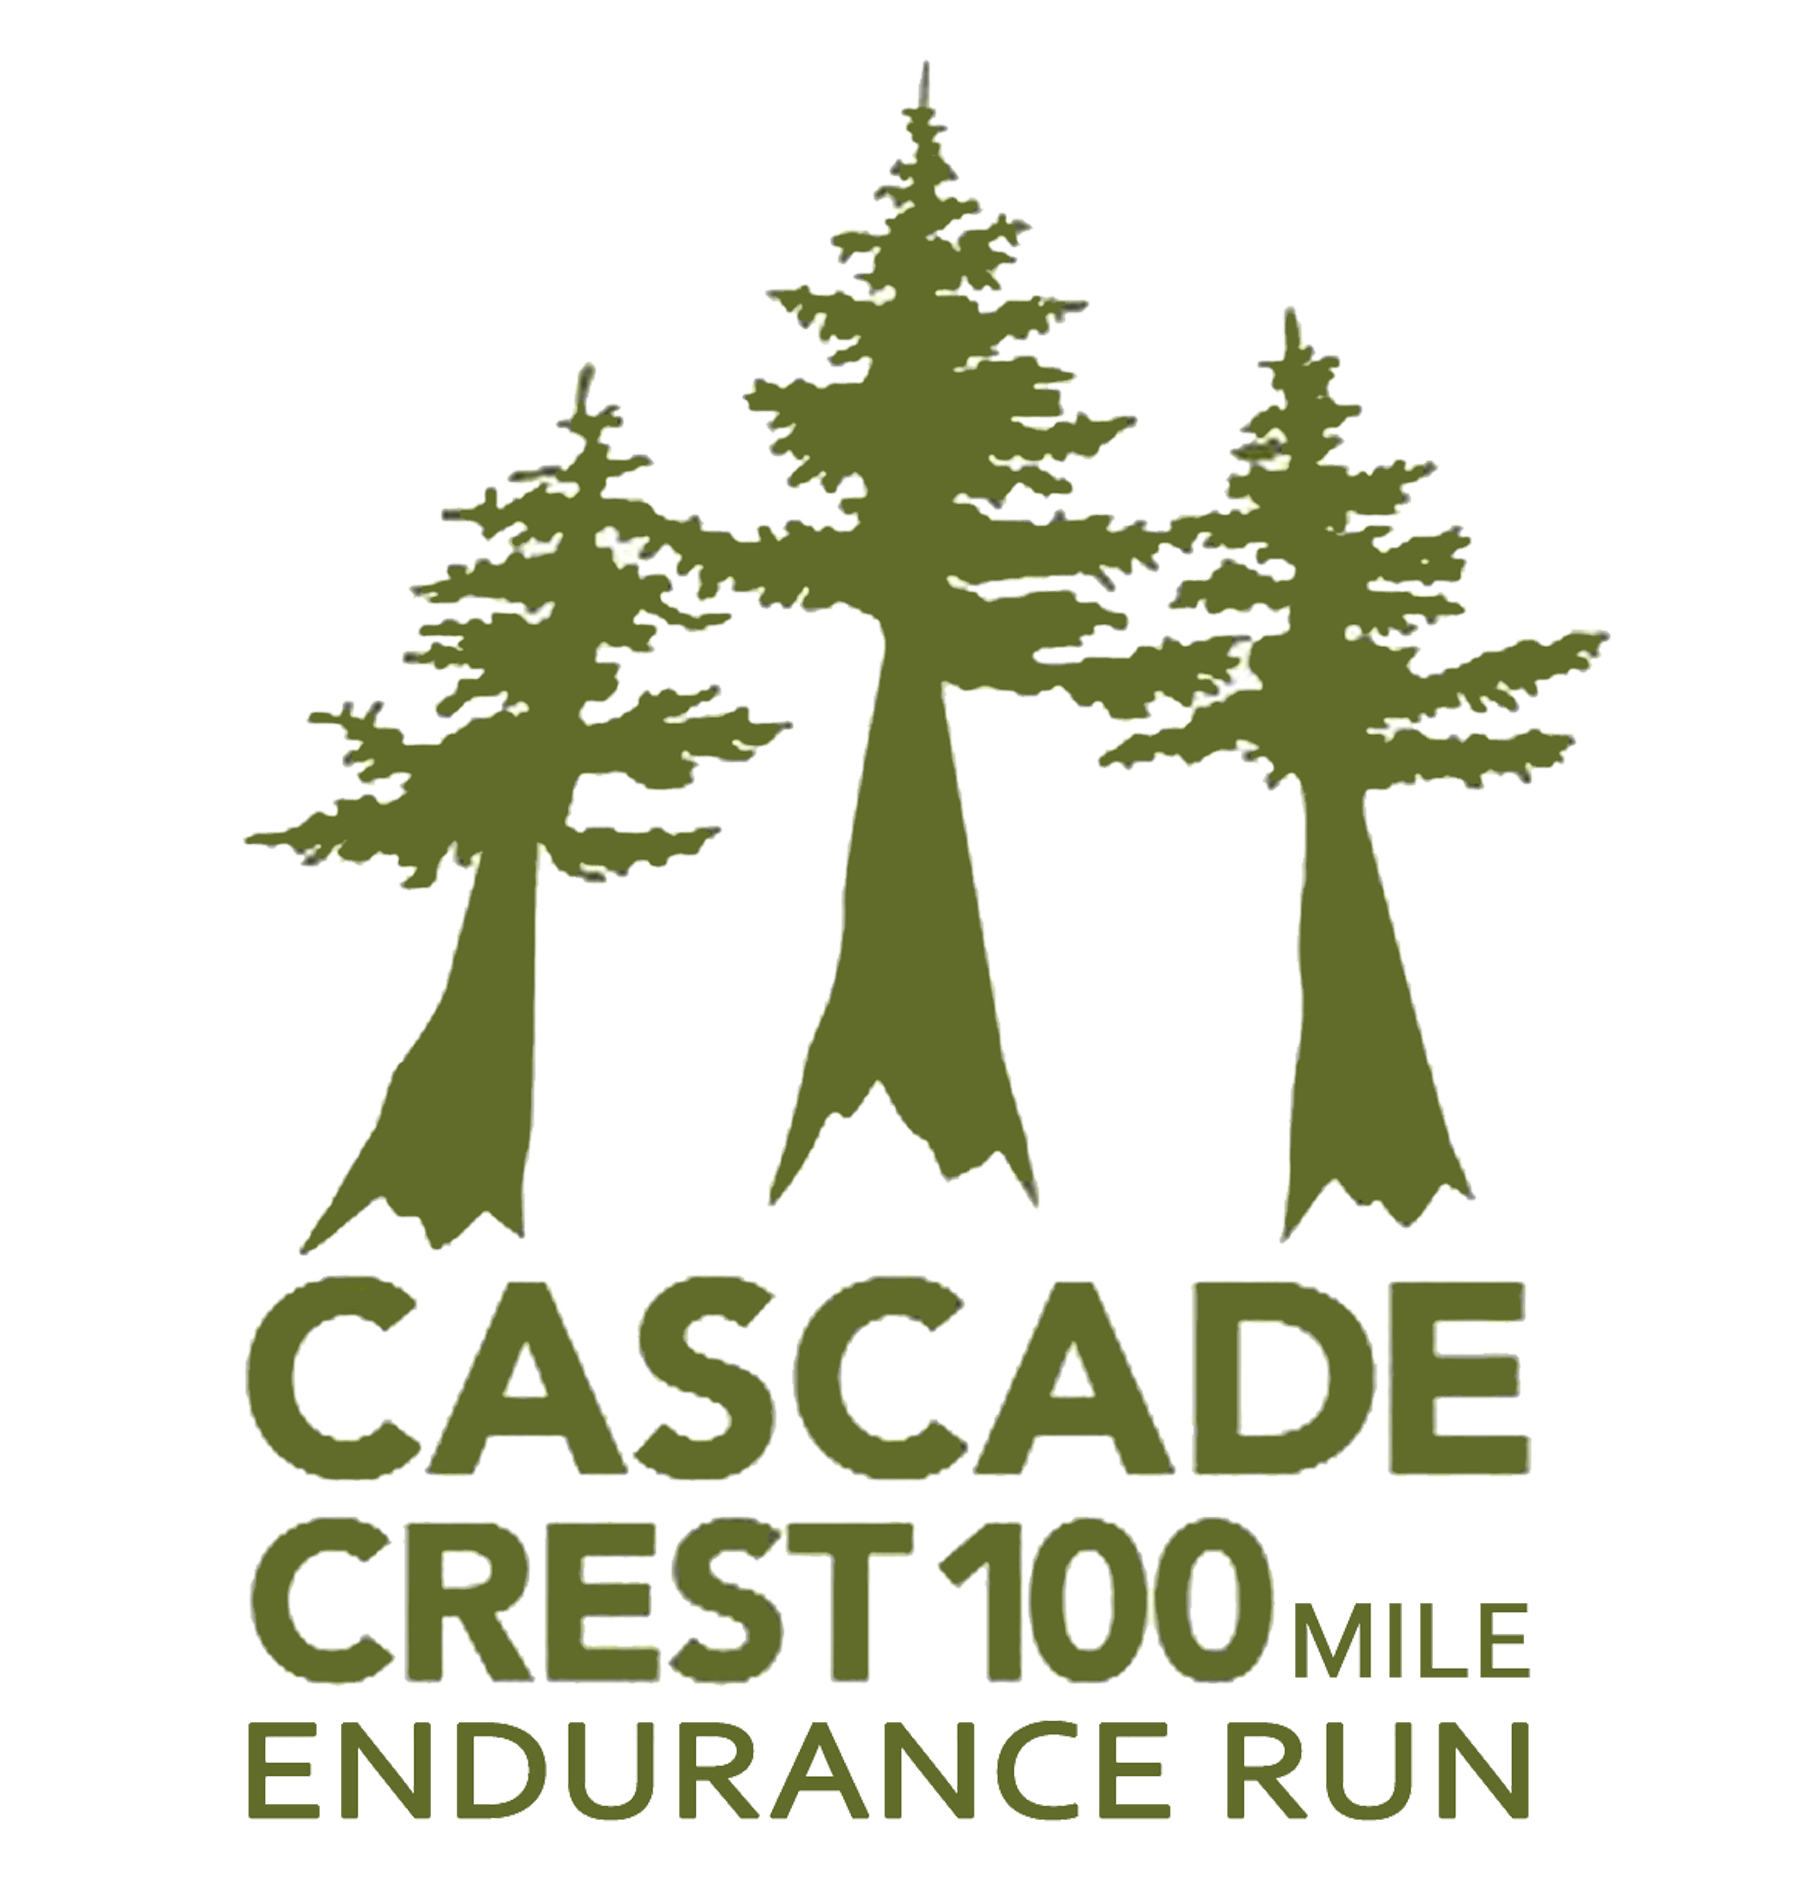 Cascade Crest 100 Mile Endurance Run Logo